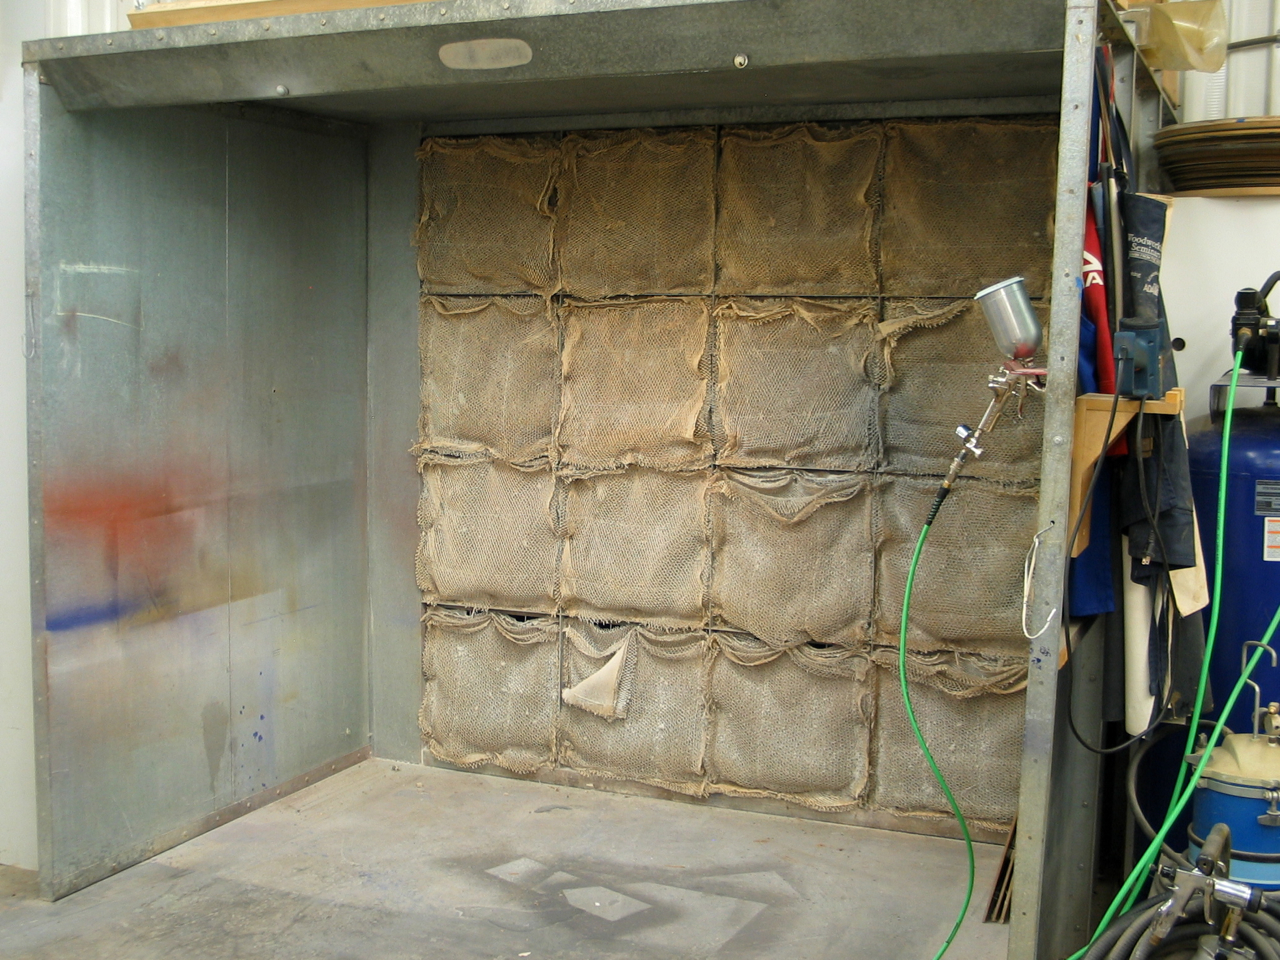 Building a spray booth